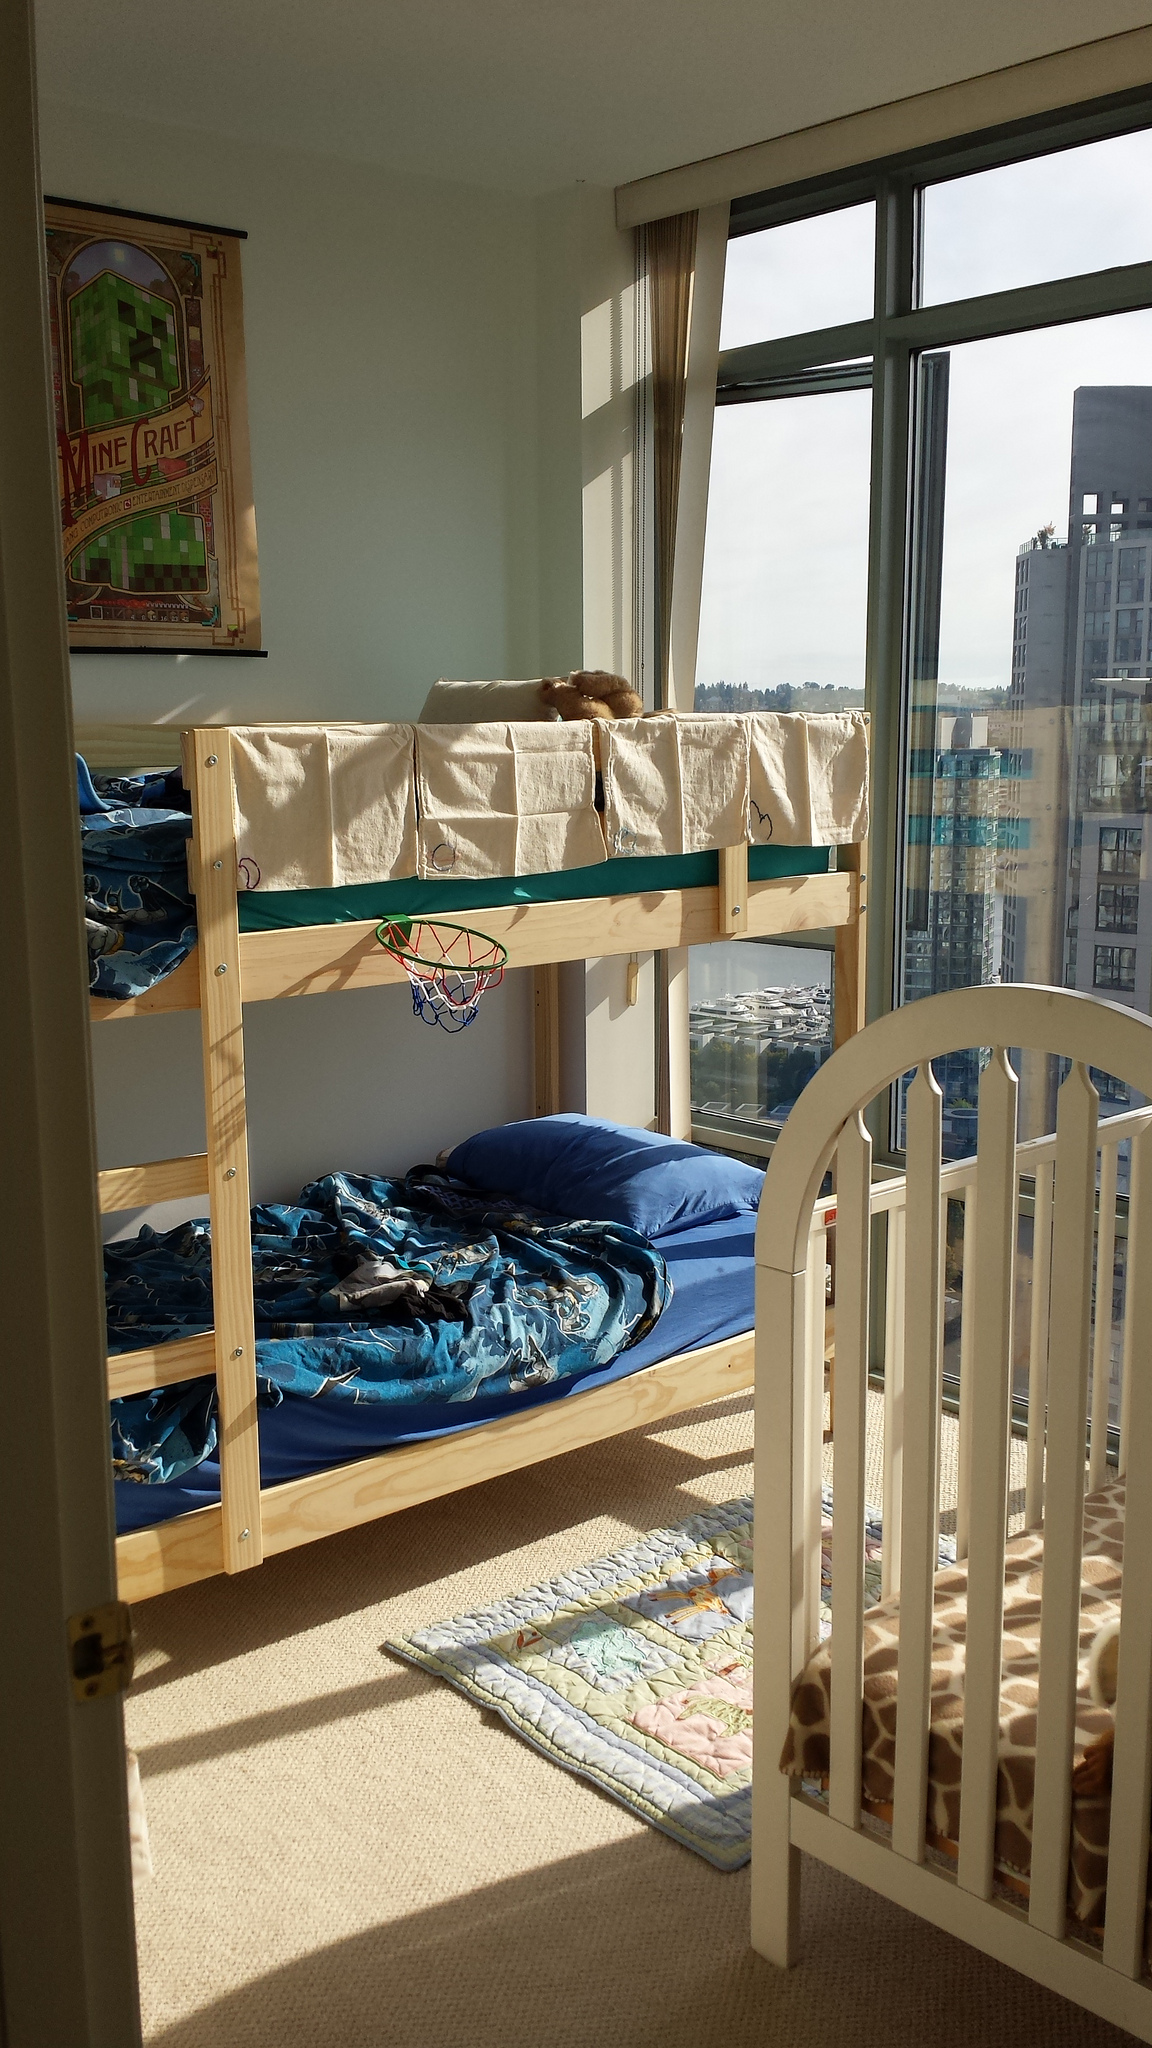 Ikea Ing Your Way To Kid Stacking, Crib Bunk Bed Ikea